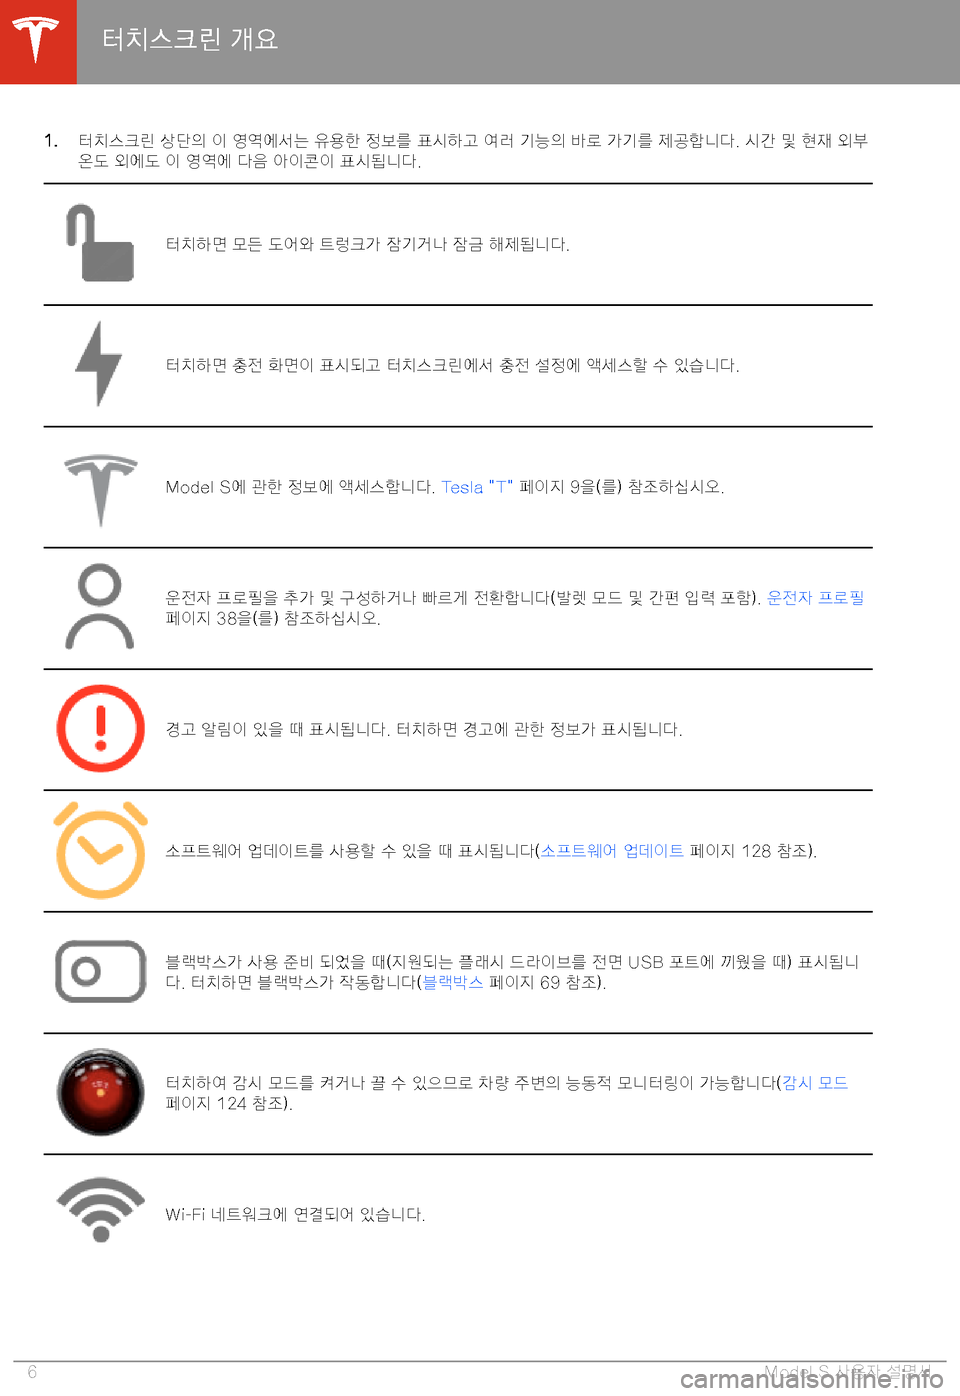 TESLA MODEL S 2020  사용자 가이드 (in Korean) �1�.GMDu8